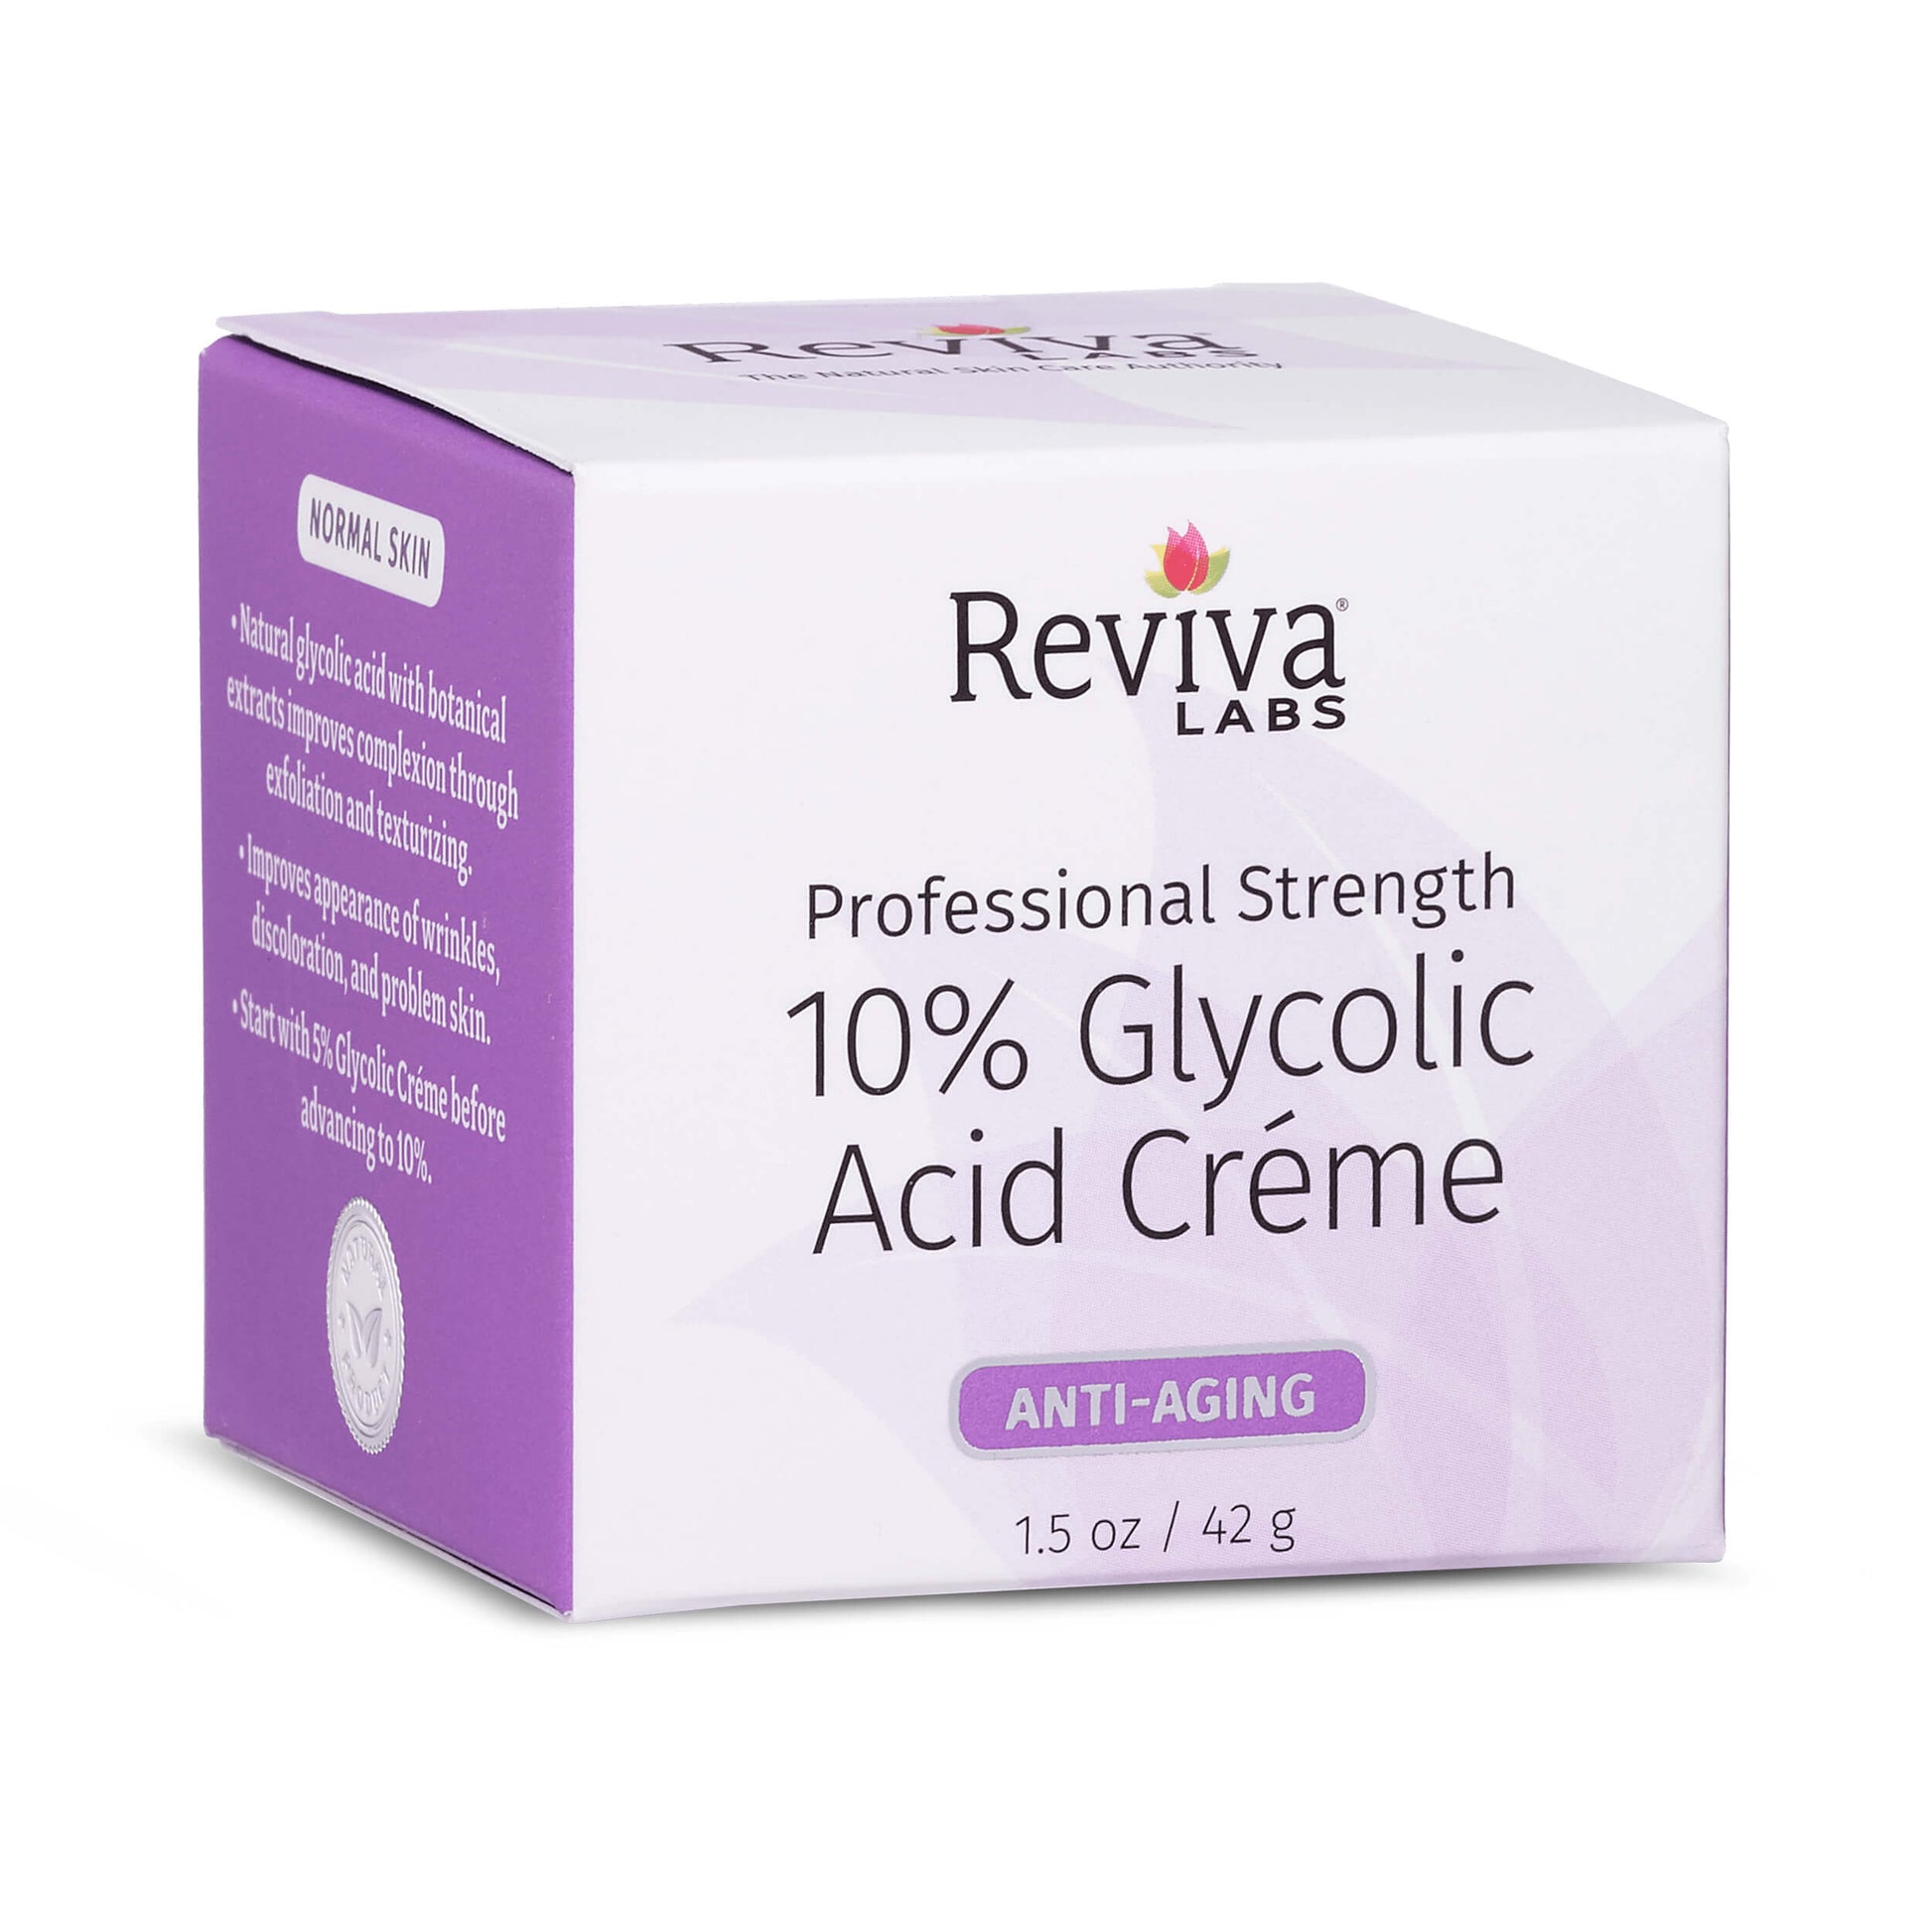 Reviva Labs 10% Glycolic Acid Creme 42 g